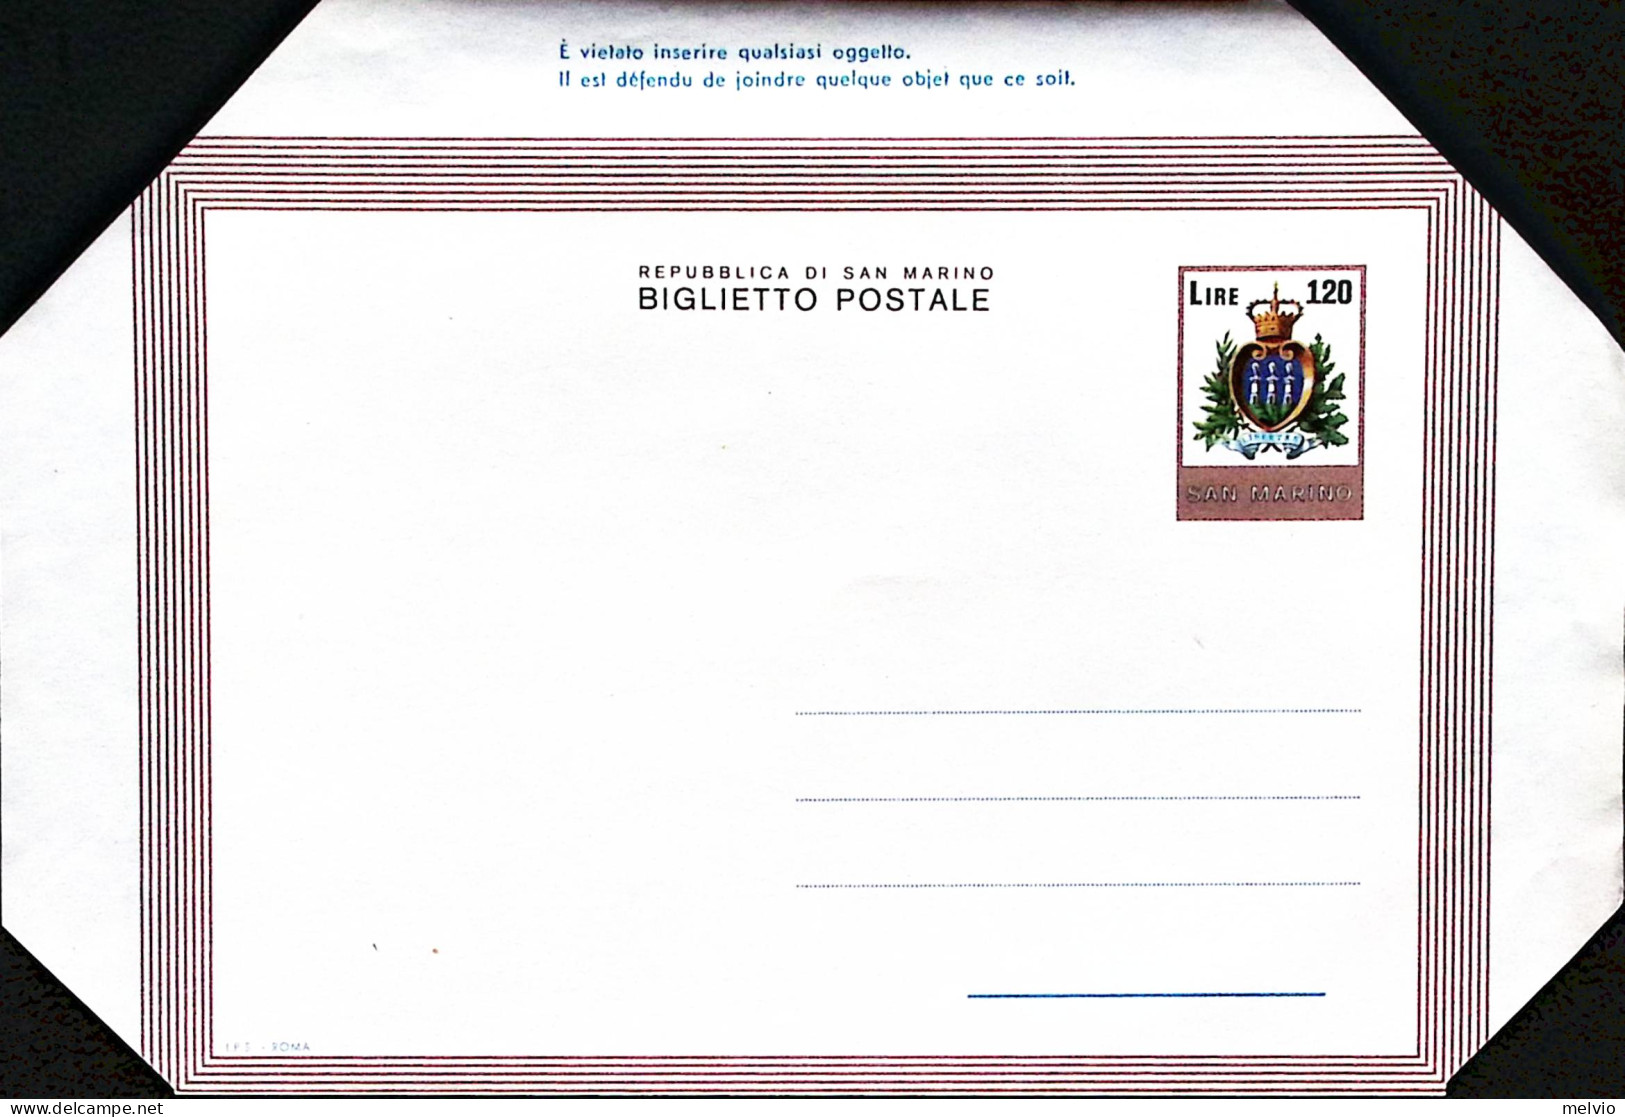 1978-SAN MARINO Biglietto Postale Lire 120 Nuovo - Interi Postali